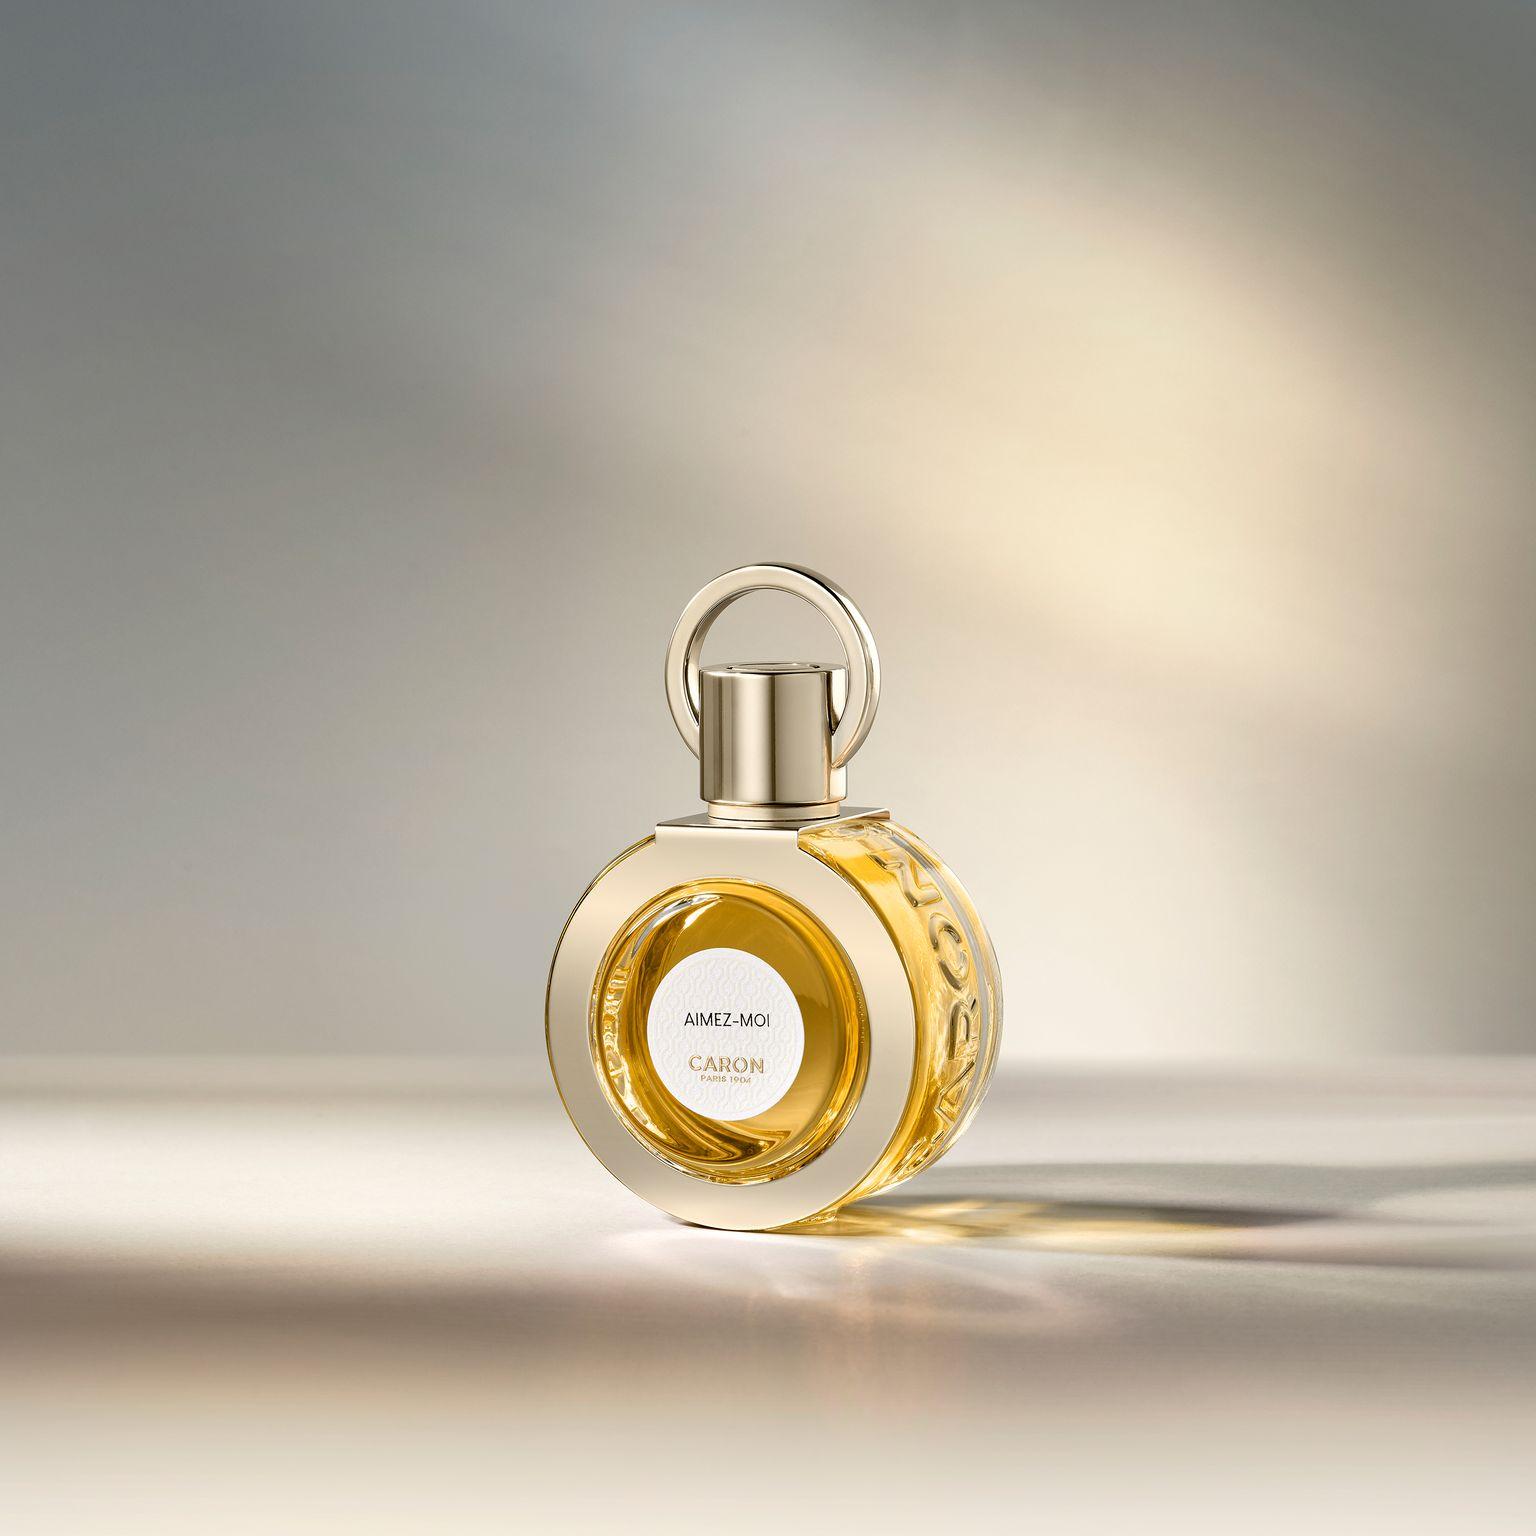 Caron Aimez Que Moi 50ml | Perfume Lounge.